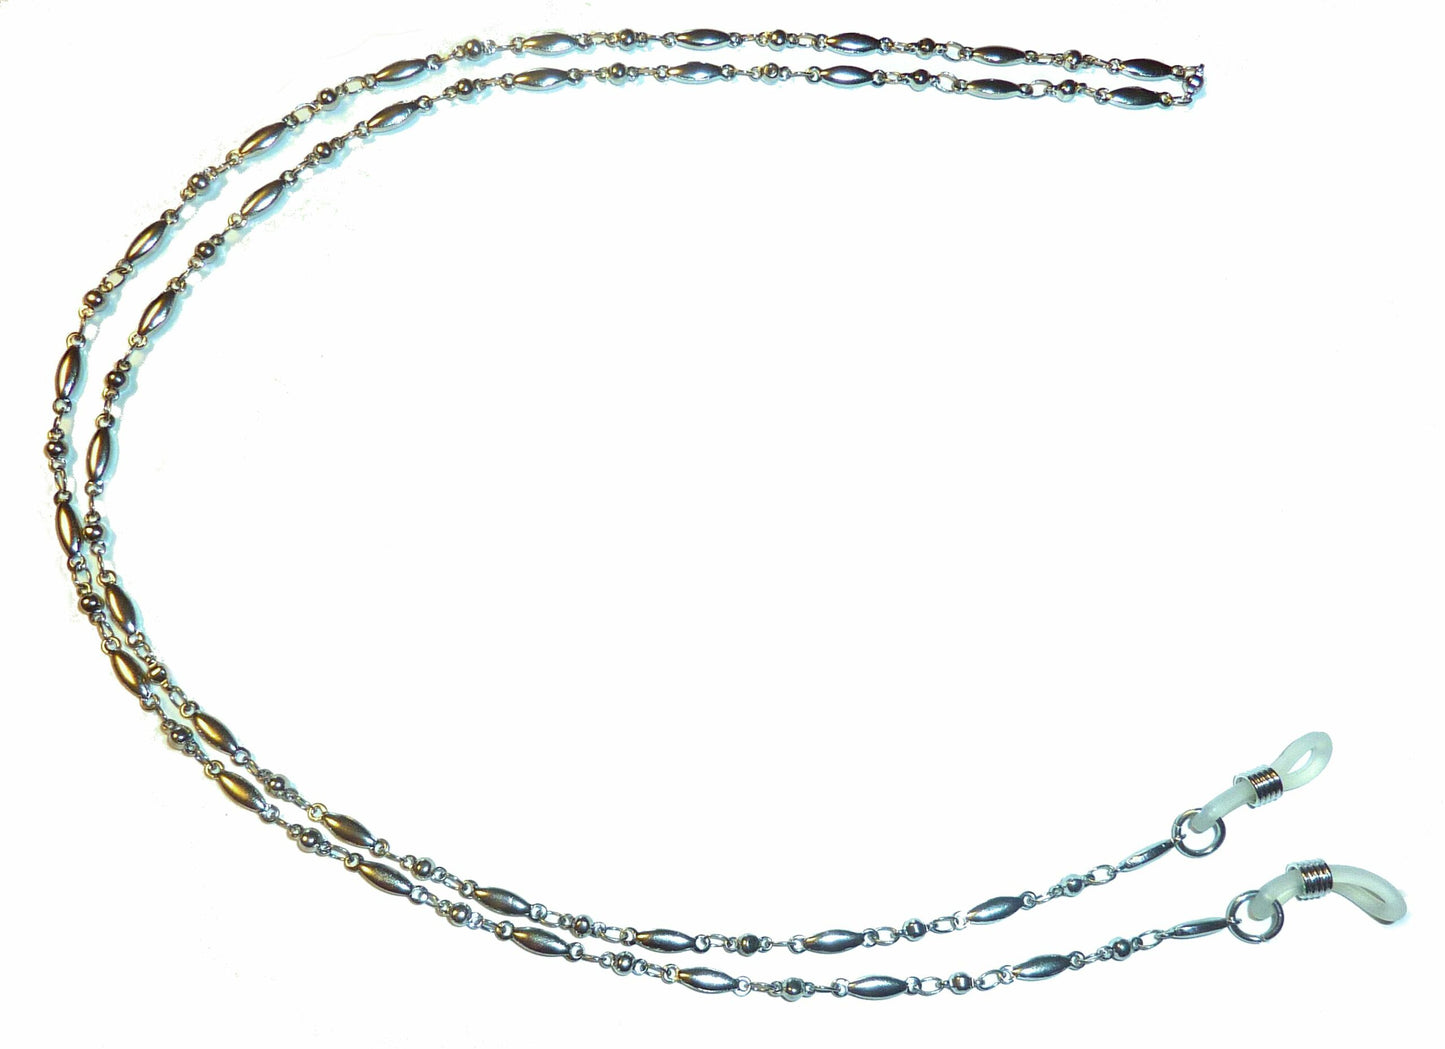 Eyeglass Holder 28" Stainless steel chain, Eyeglass chain, leash - Stainless Steel